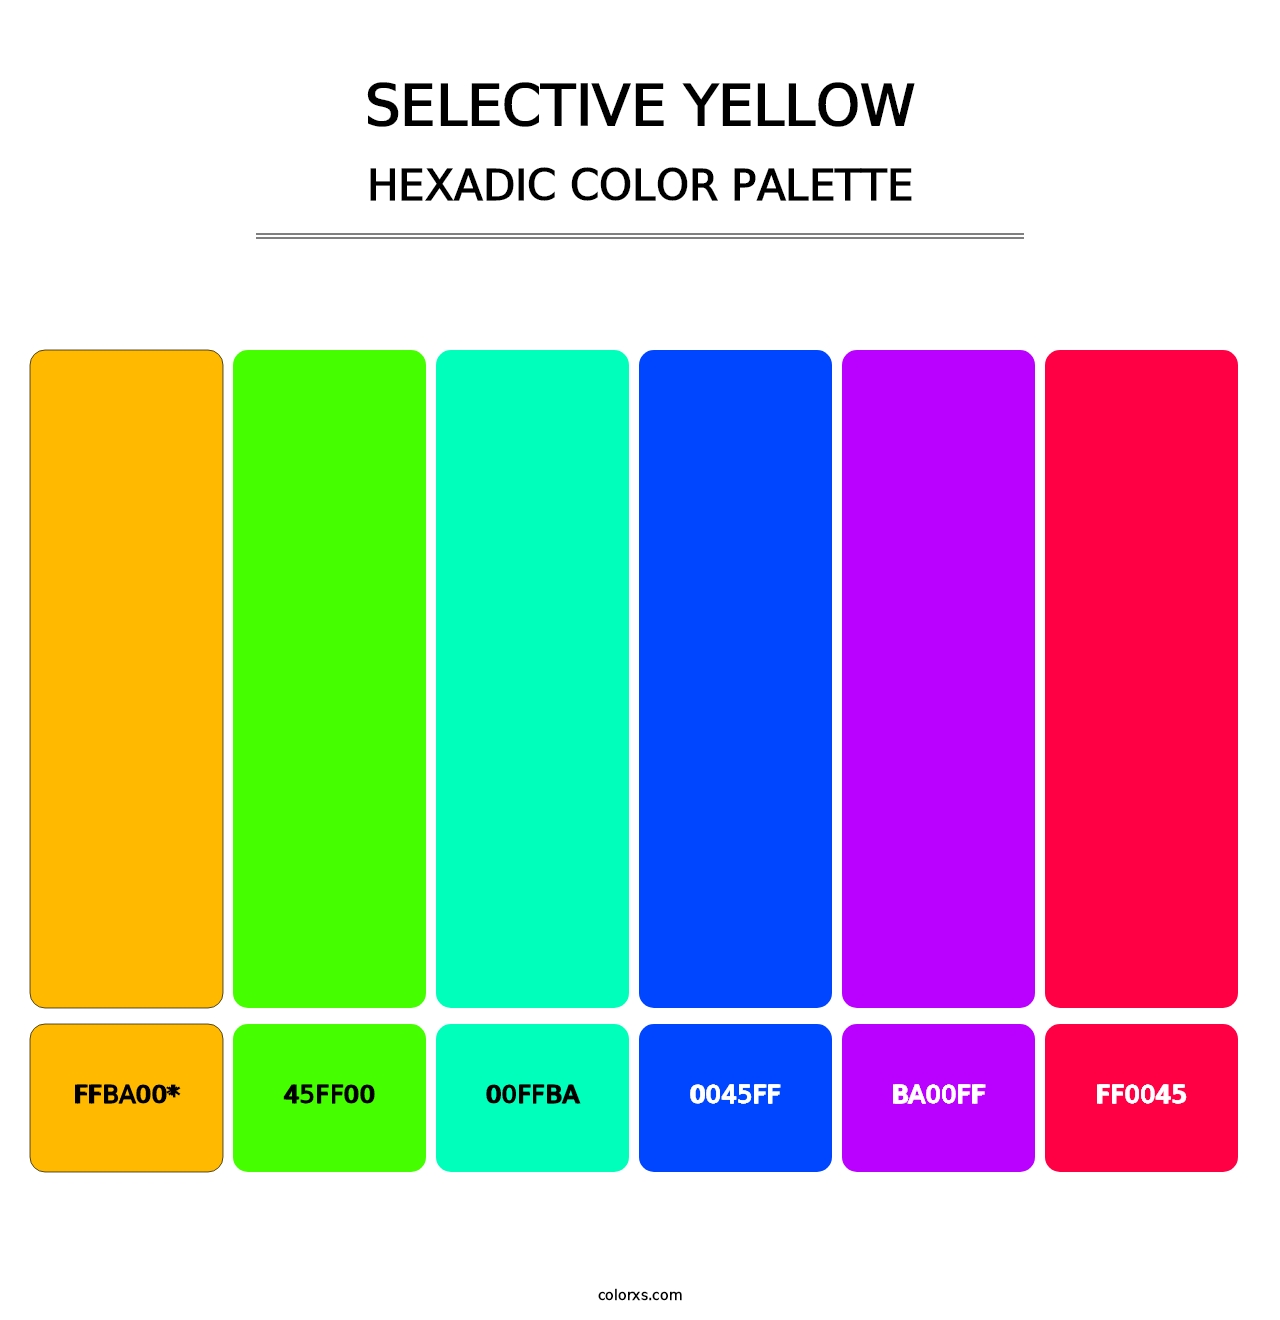 Selective yellow - Hexadic Color Palette